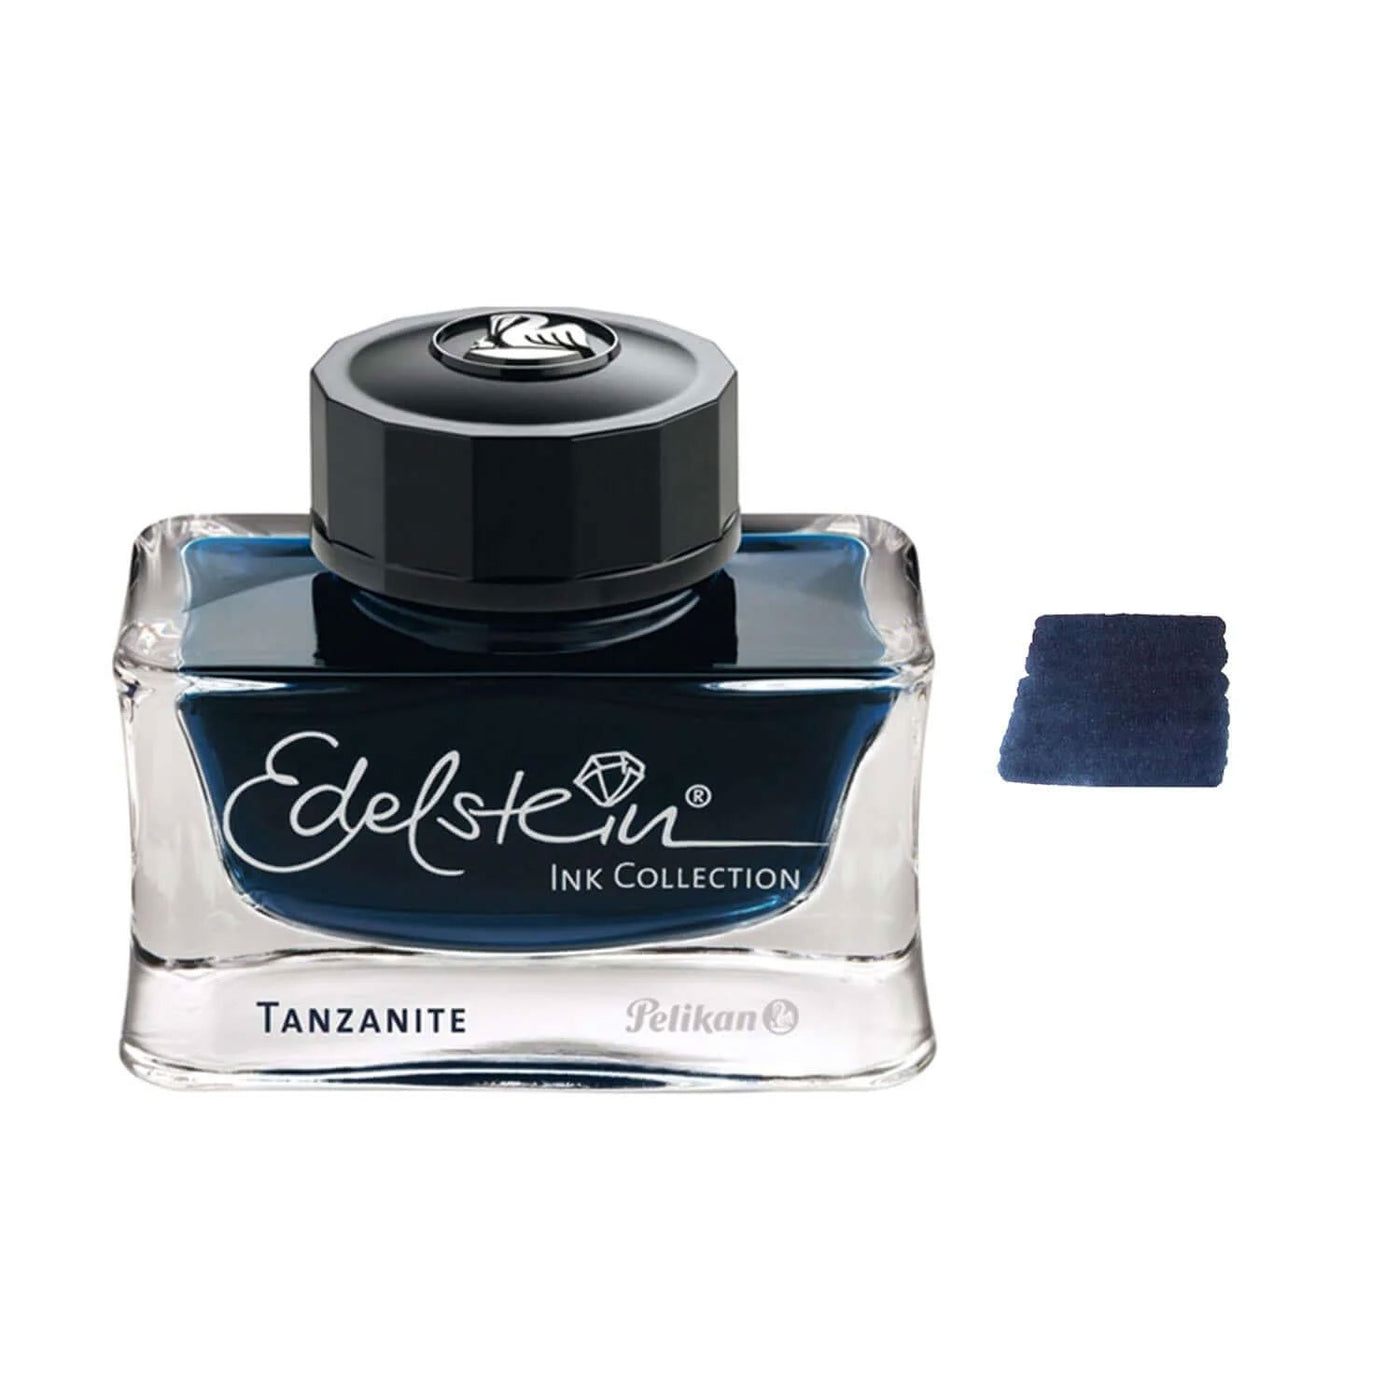 Pelikan Edelstein Ink Bottle Tanzanite (Blue-Black) 50ml 2